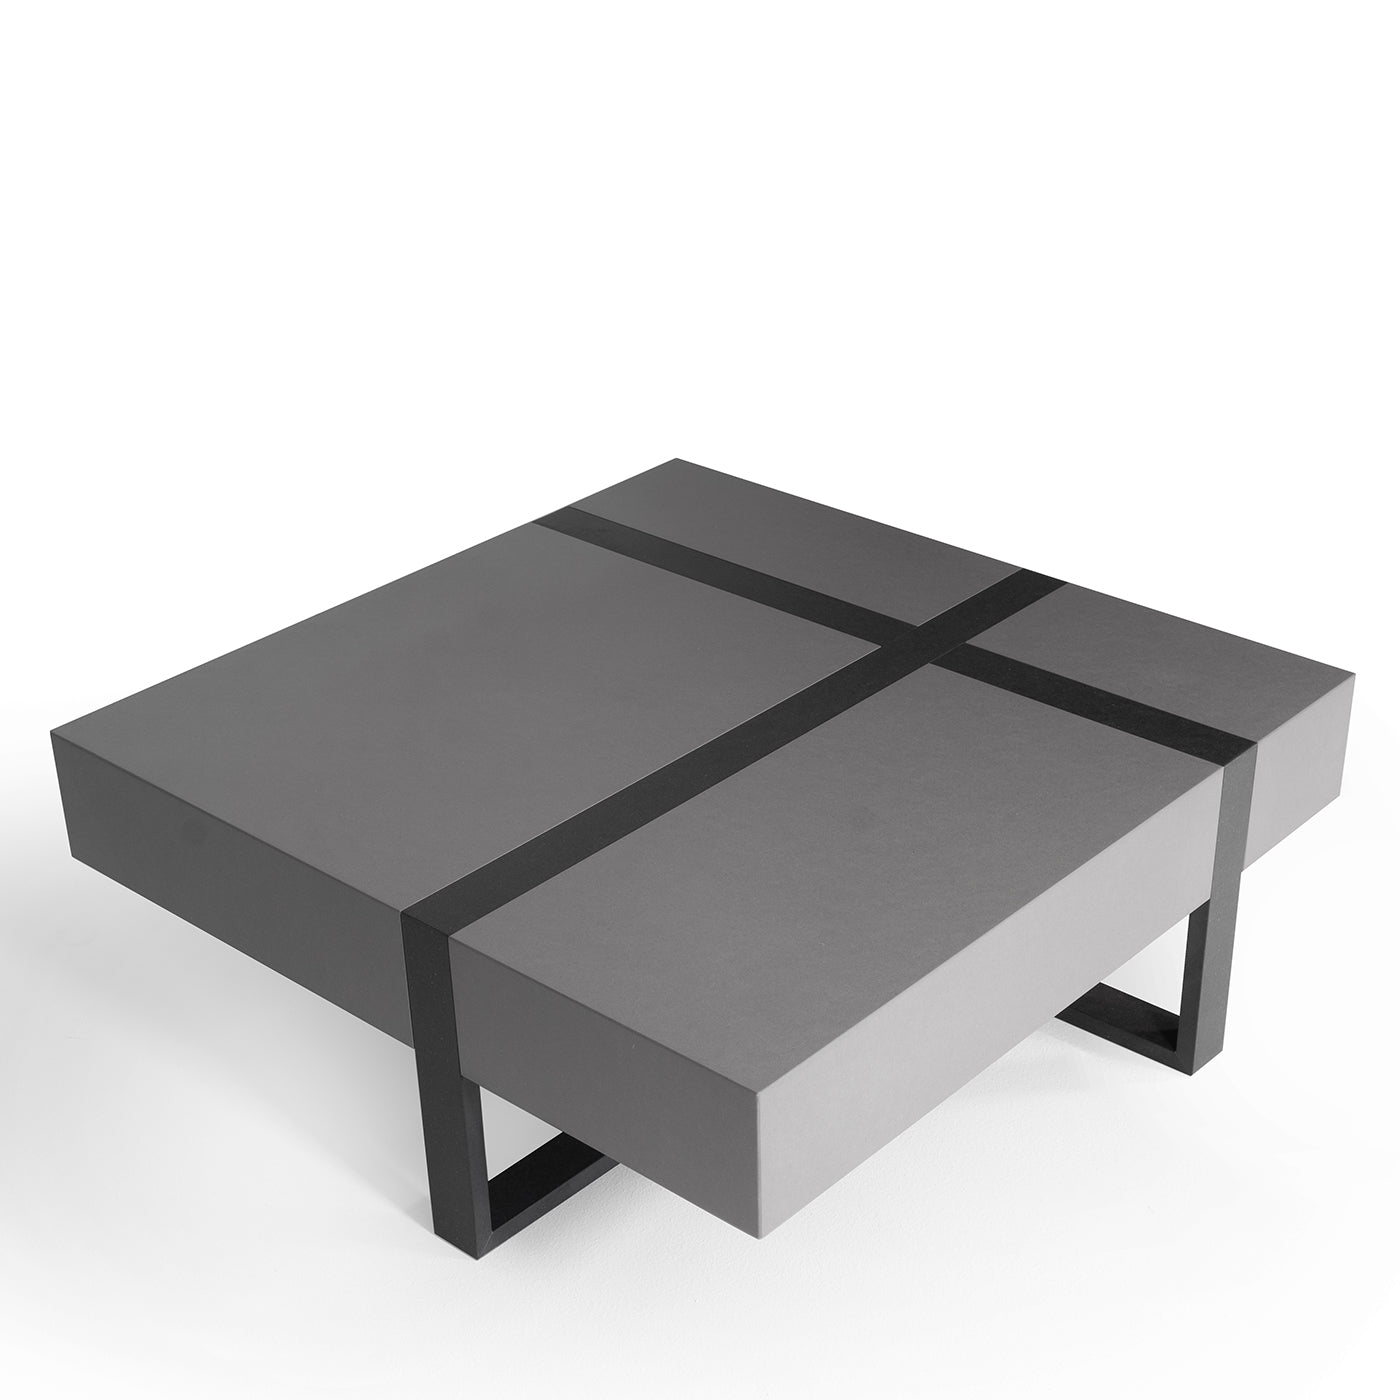 Loop Gray Side Table by Giulia Contaldo - Alternative view 2